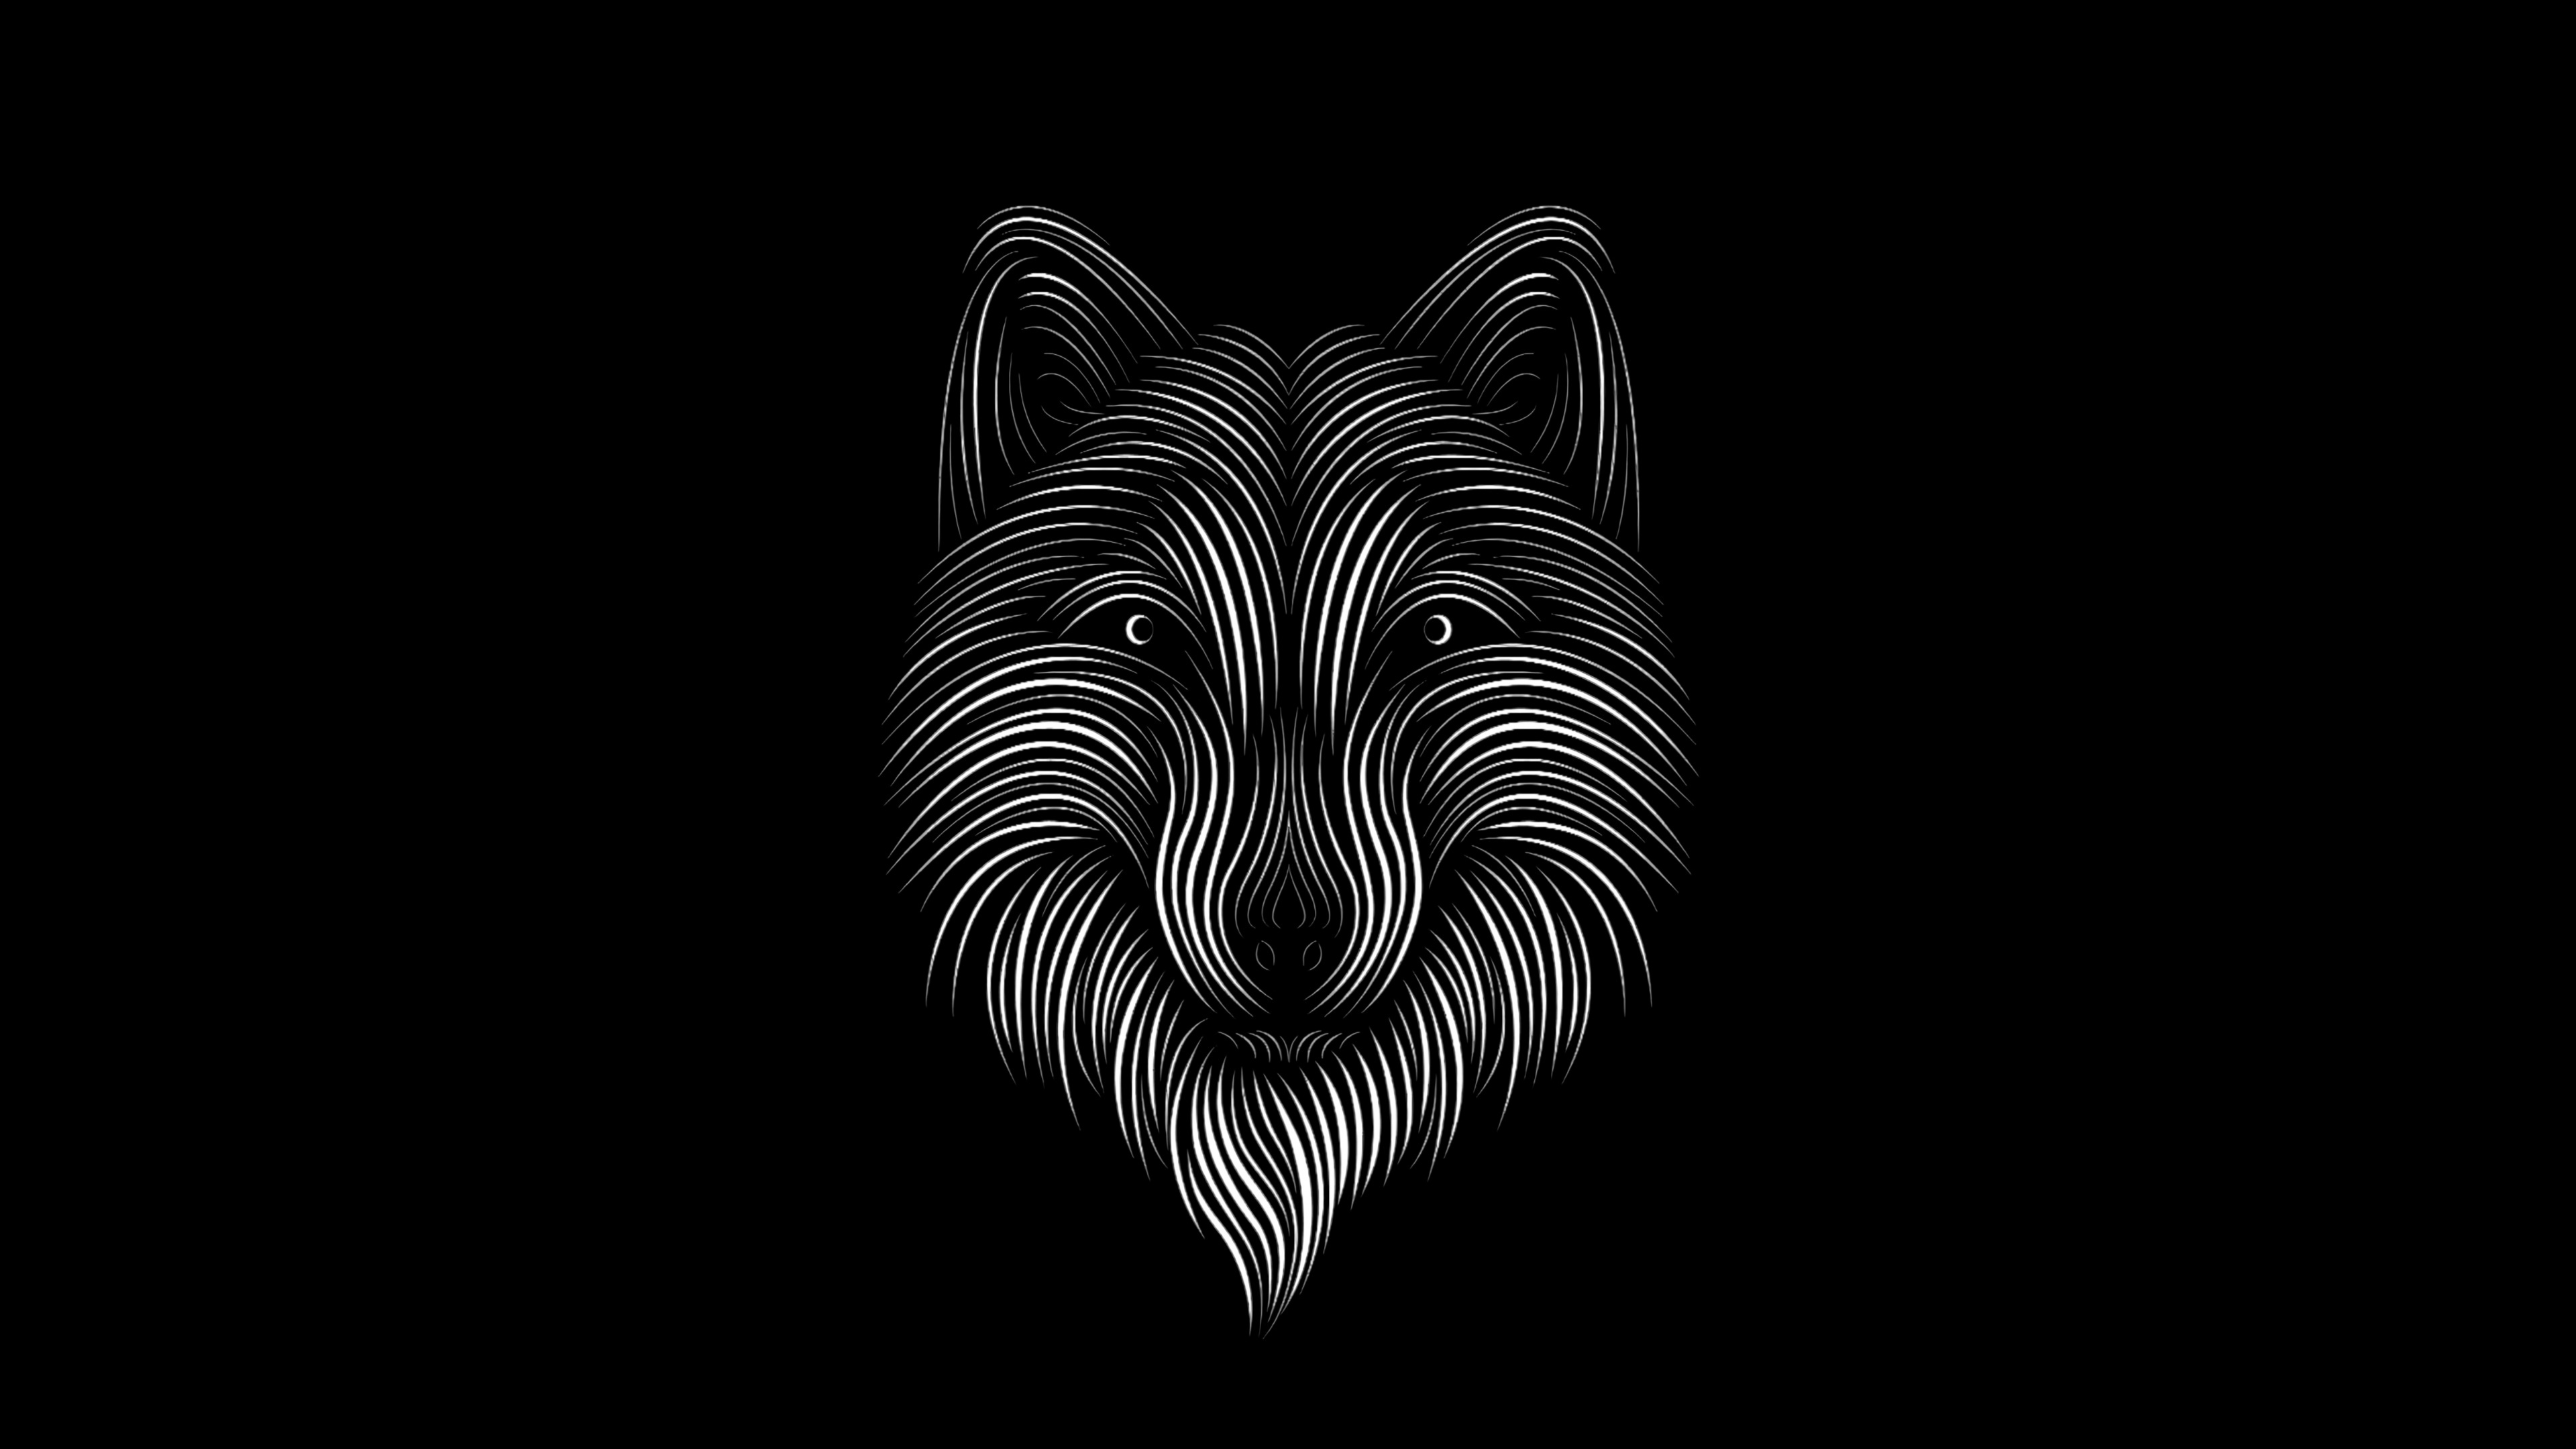 Black and White Zebra Illustration. Wallpaper in 3840x2160 Resolution